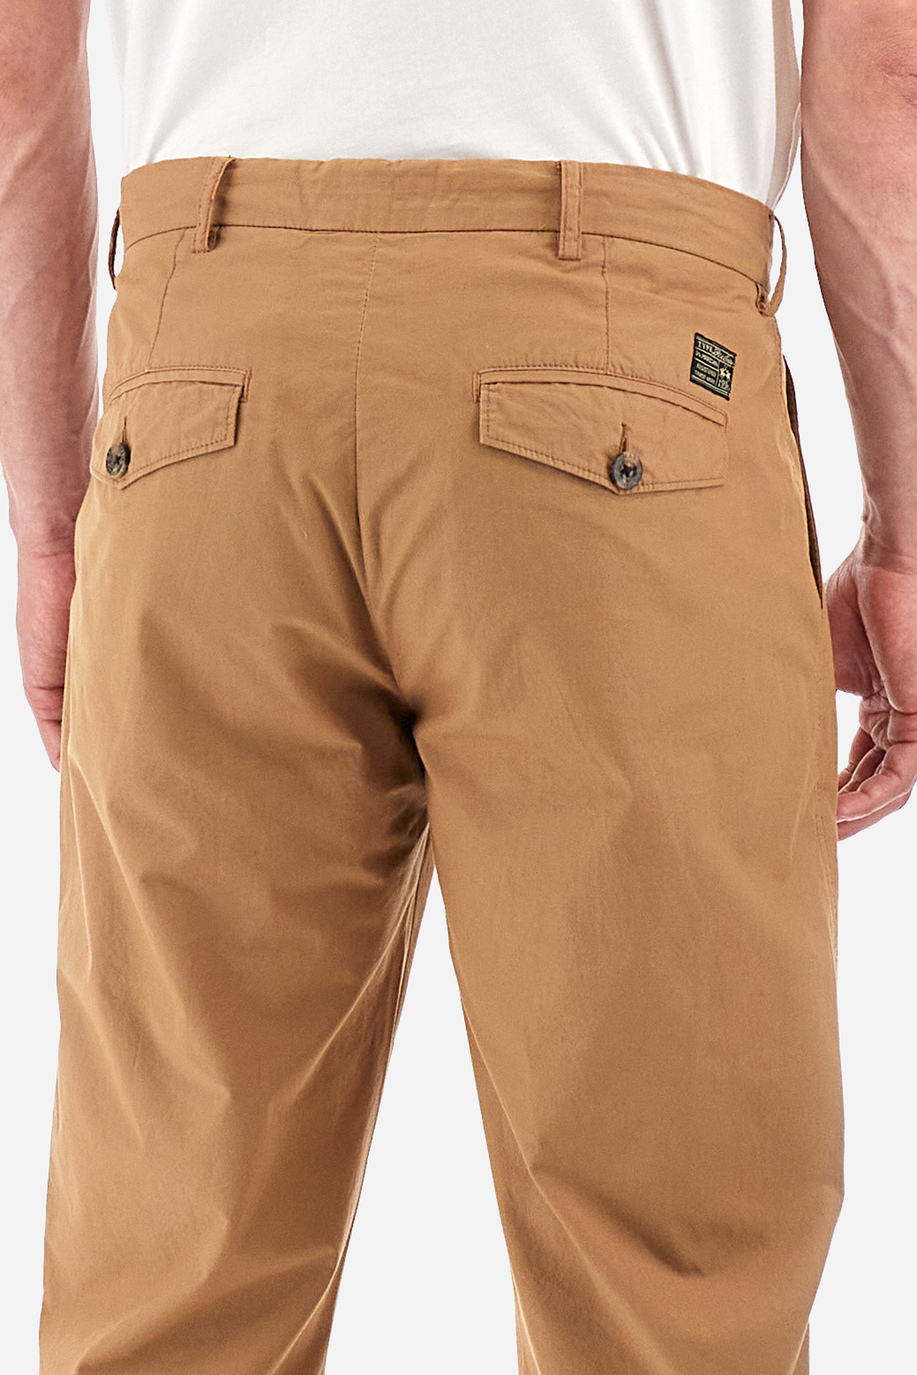 Pantalone chino regular fit in cotone - Yorrick - Pantaloni | La Martina - Official Online Shop